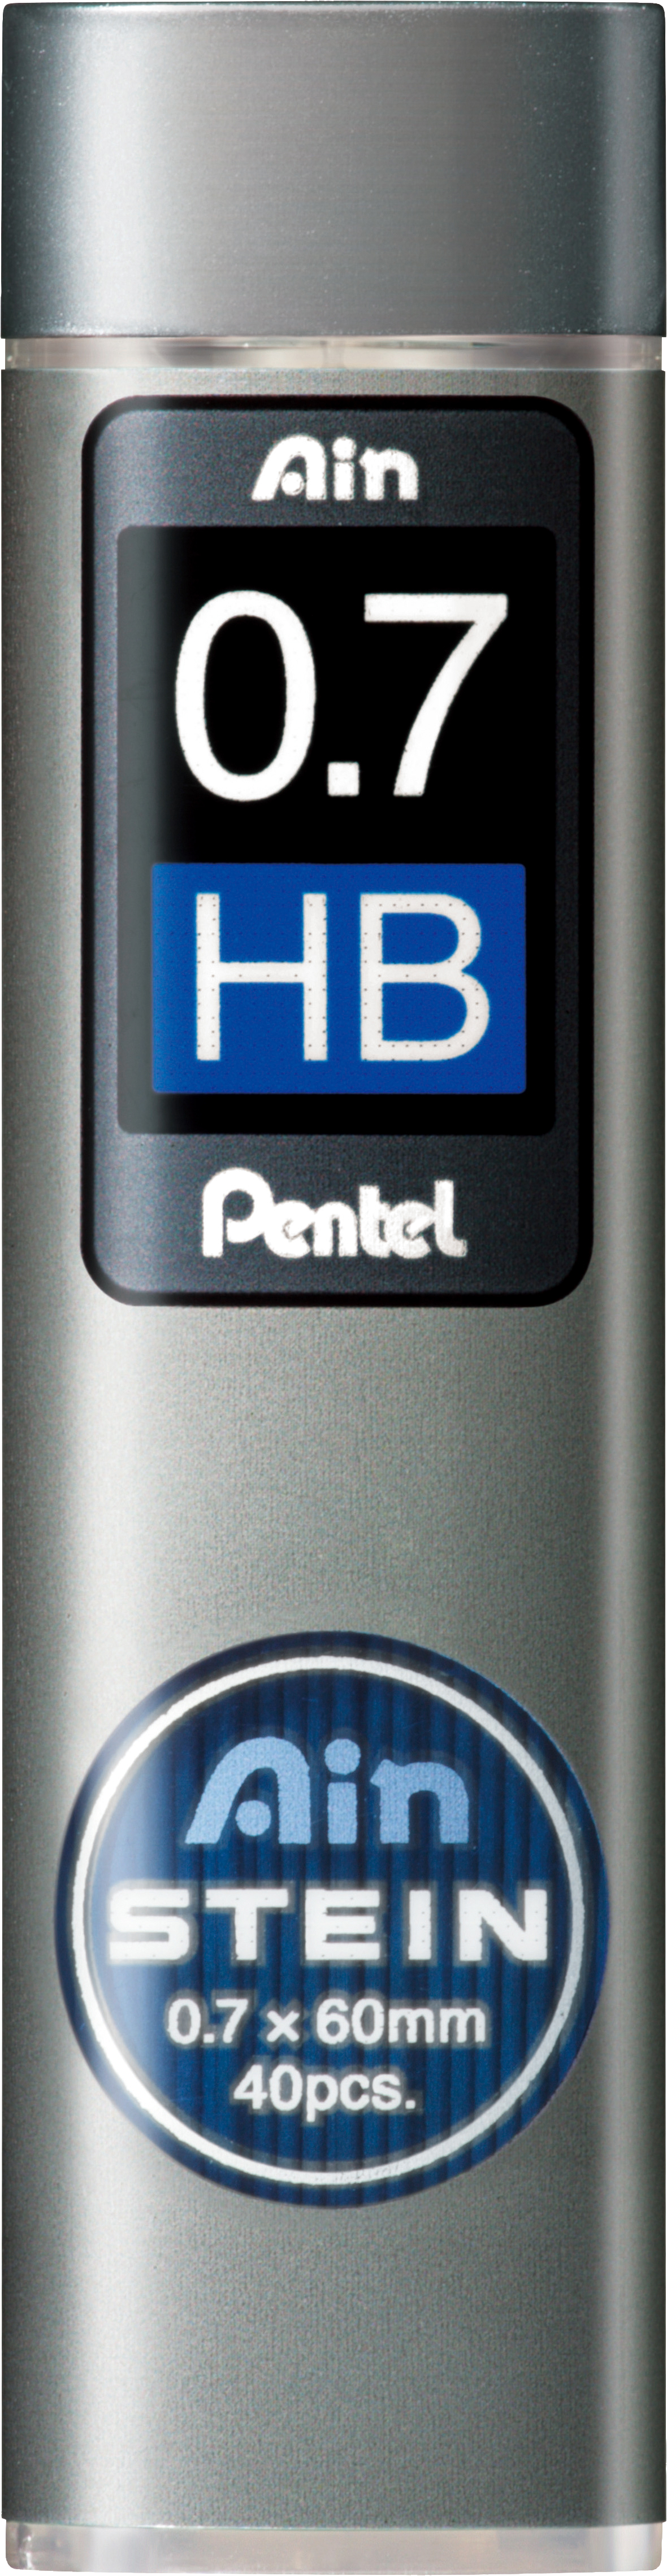 PENTEL Mines crayons AINSTEIN 0.7mm C277-HBO noir/12 pcs. HB